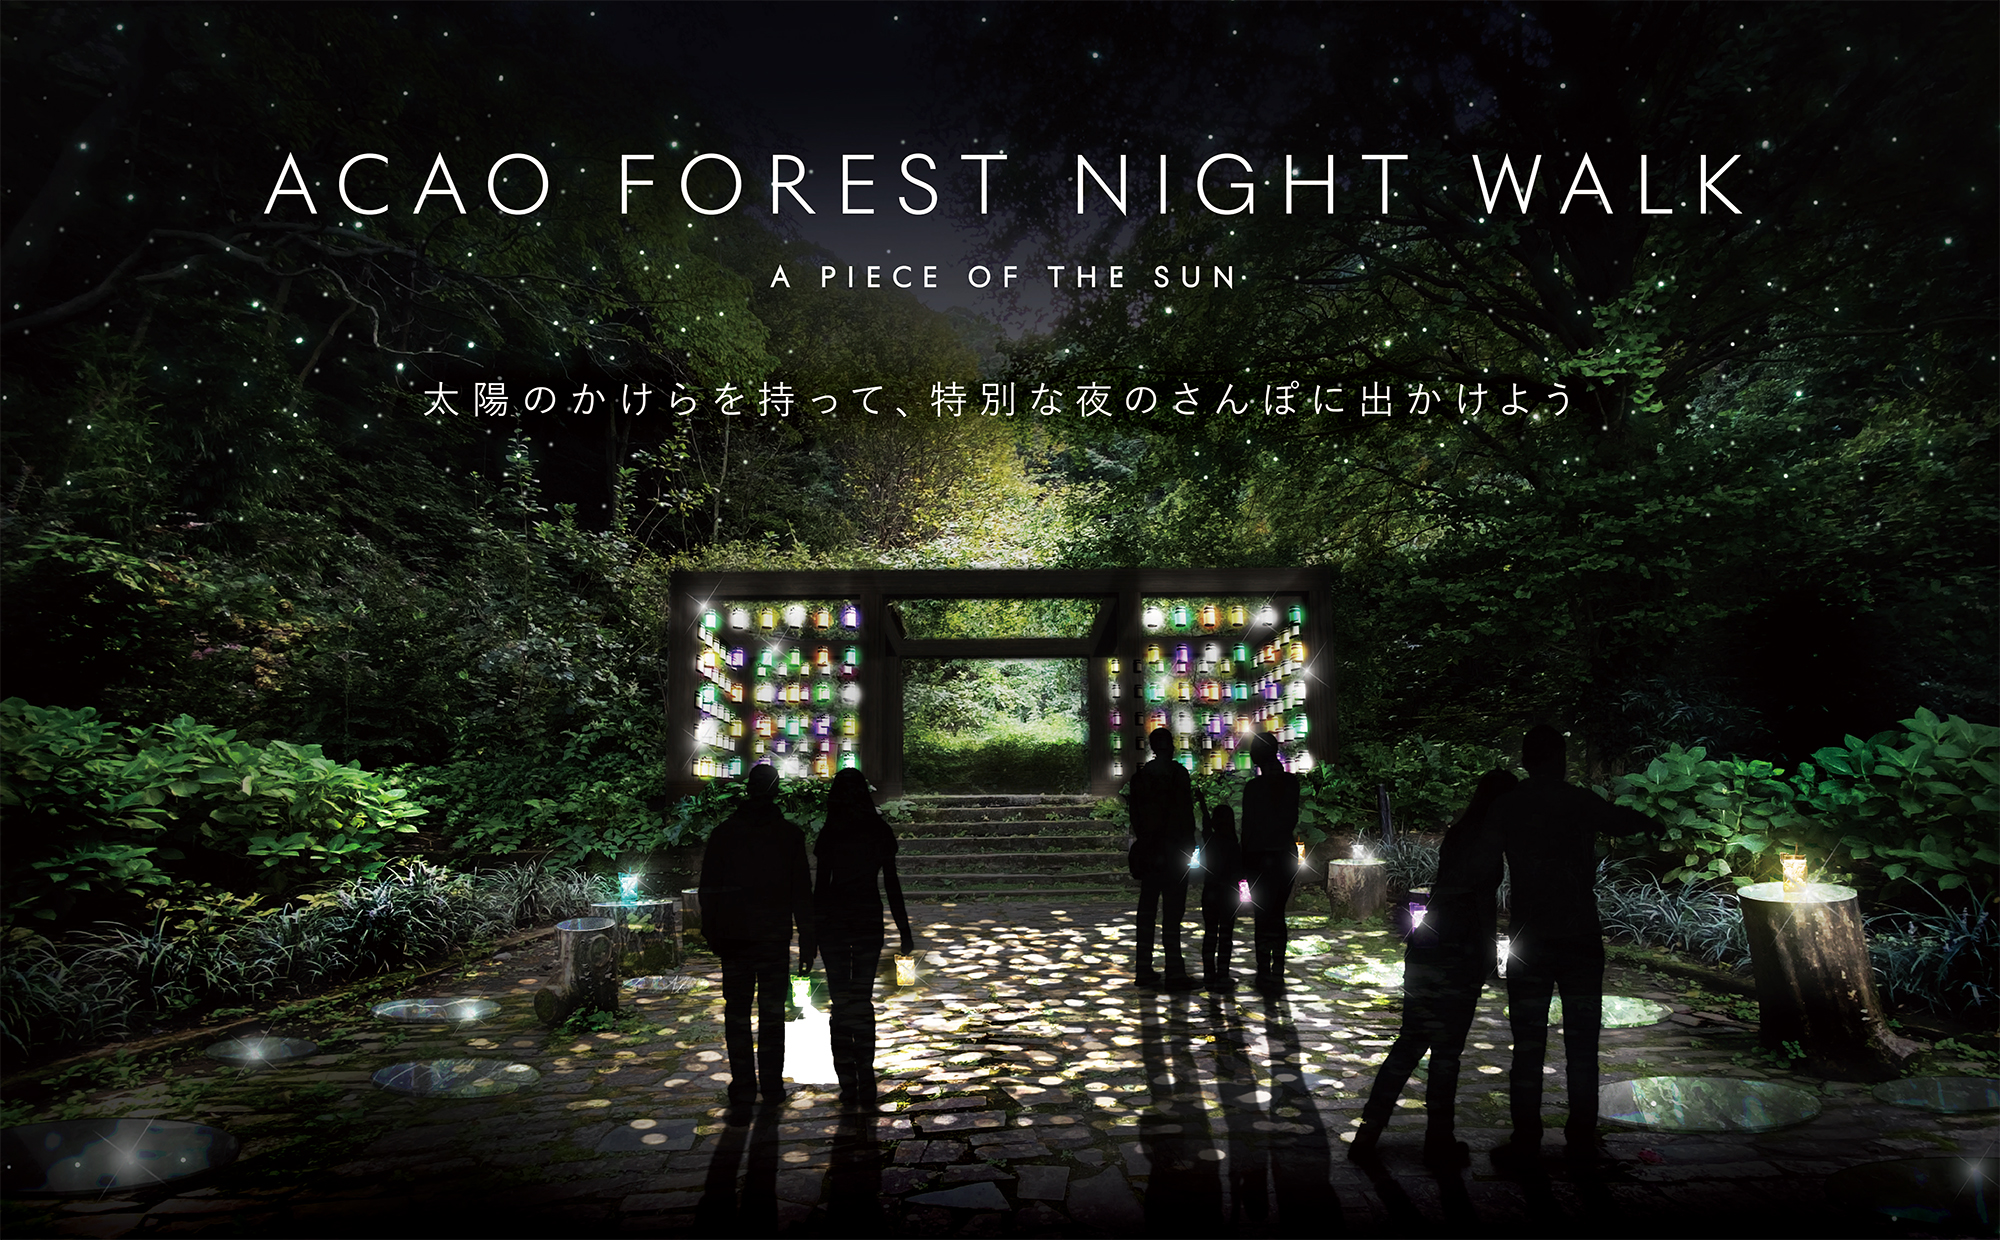 Acao Spa Resort 熱海の夜を満喫する Acao Forest Night Walk を開催 Acao Spa Resort株式会社のプレスリリース